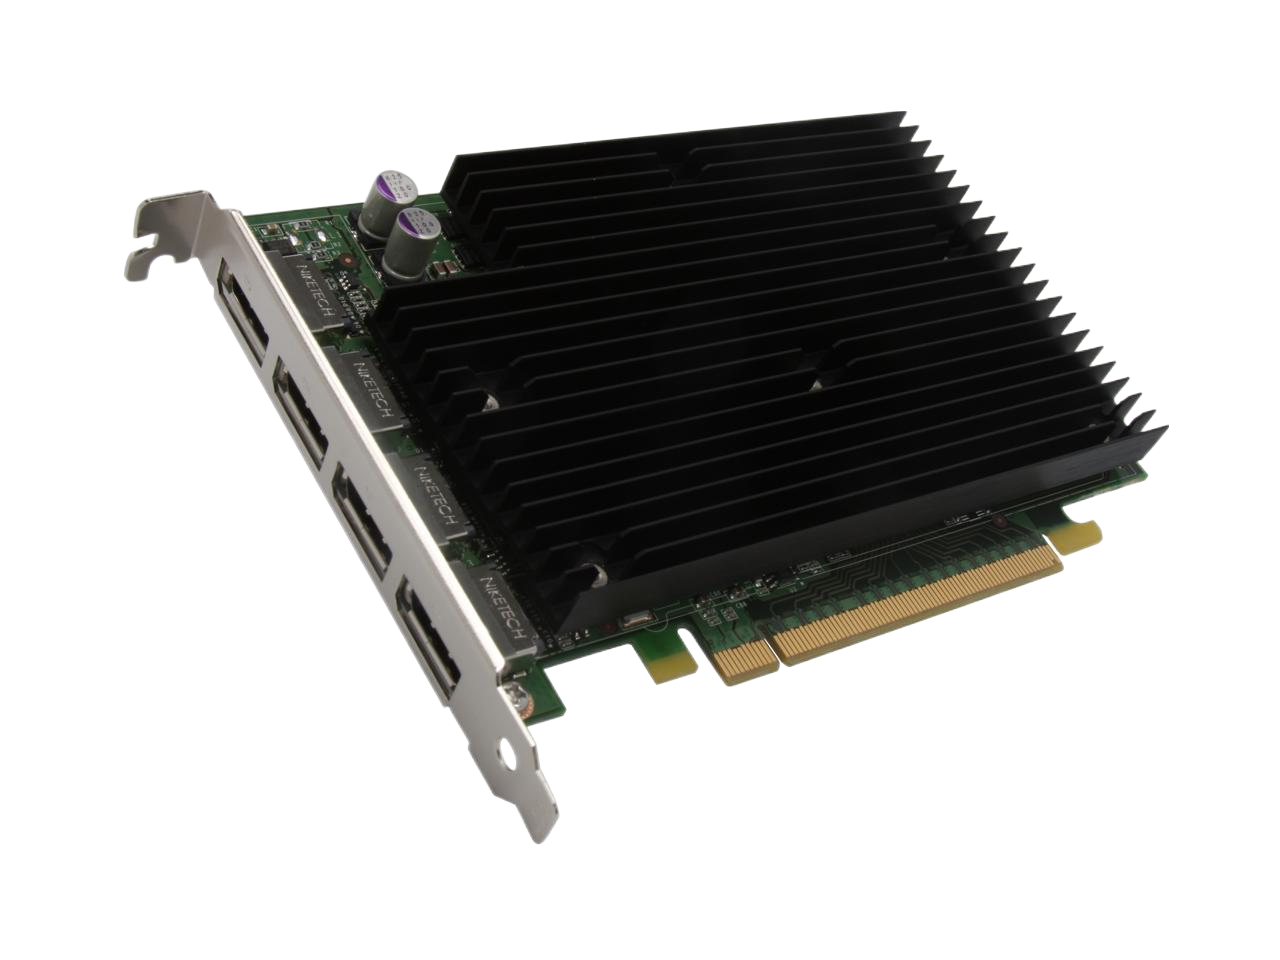 PNY NVIDIA Quadro NVS 450 512MB 128-bit GDDR3 PCI Express x16 Workstation Video Card VCQ450NVS-X16-PB